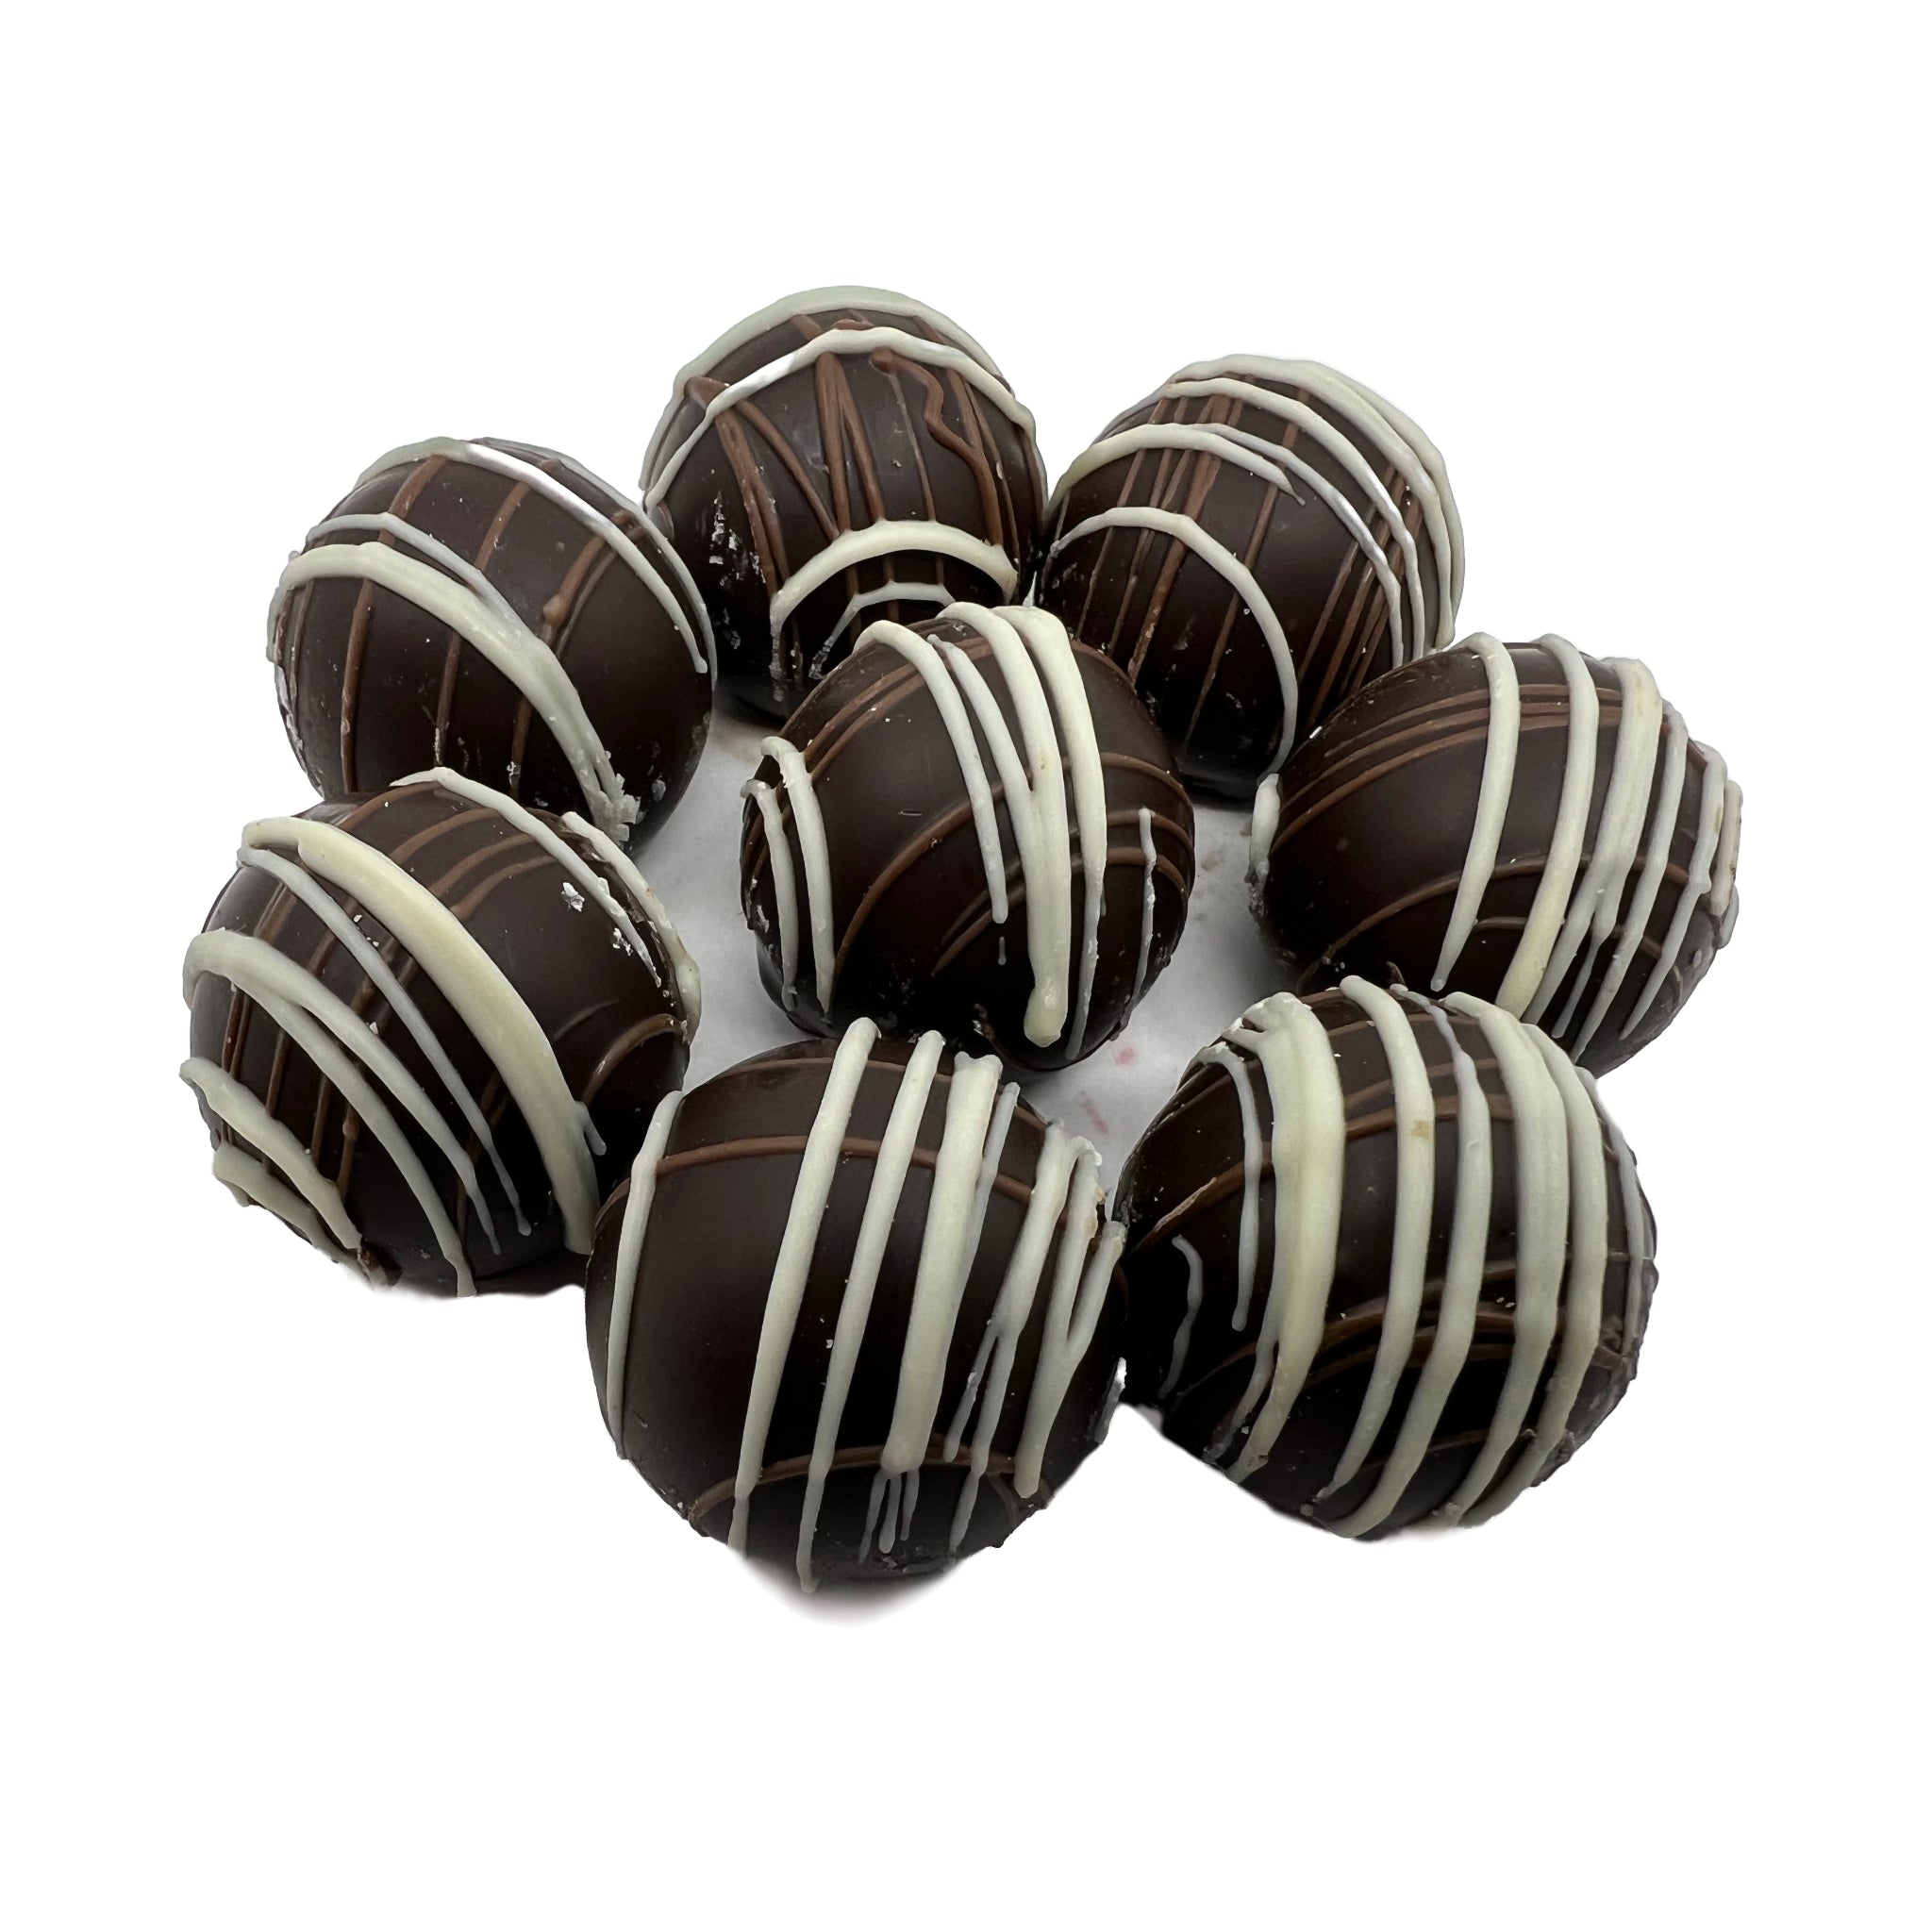 Caramel Dark Chocolate Truffle.  Dark chocolate balls with brown caramel stripes and white thicker stripe lacing crossing them. 